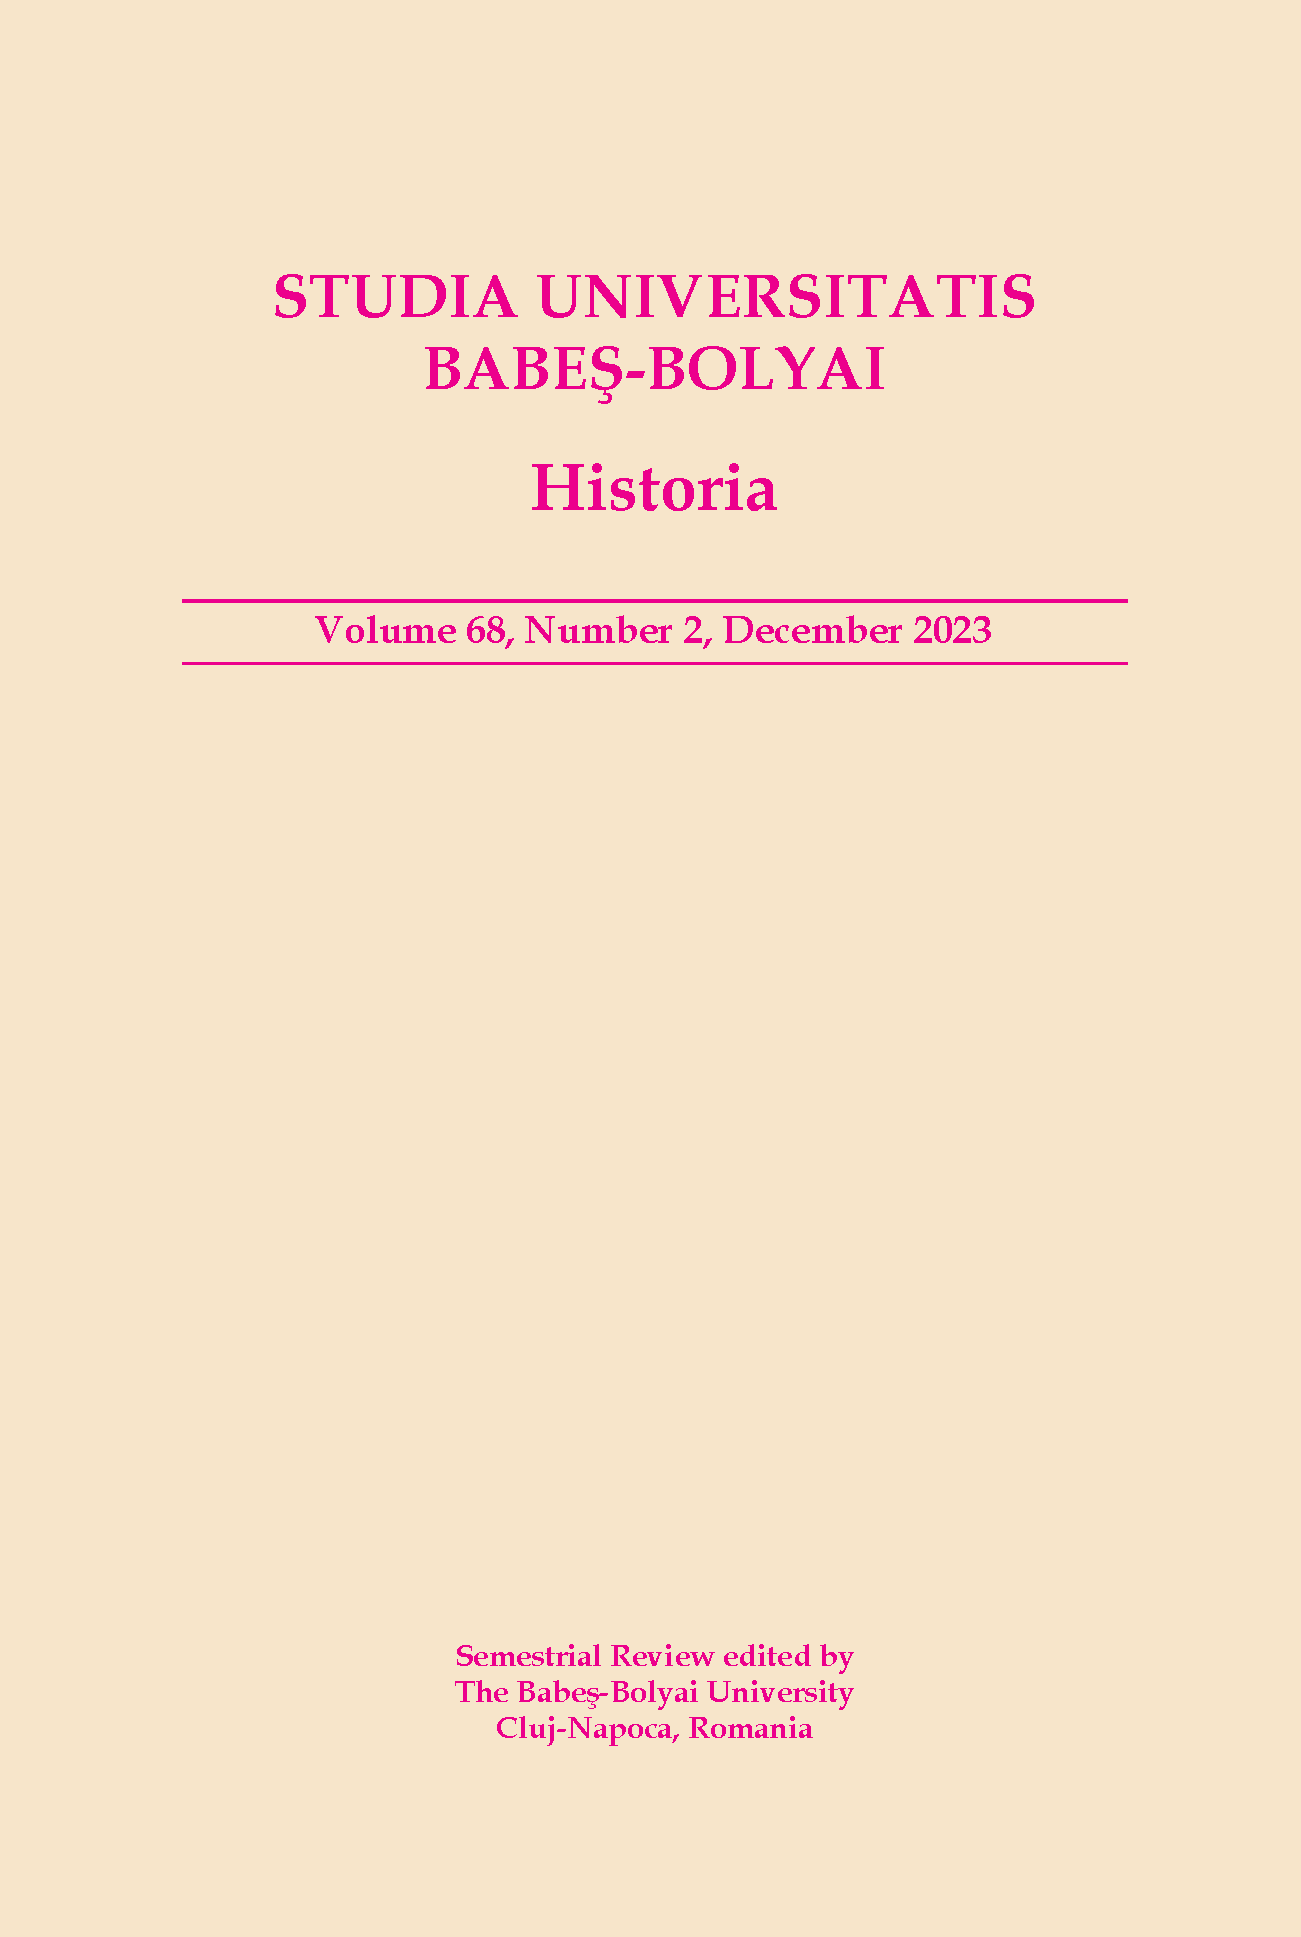 STUDIA UBB HISTORIA, Volume 68 (LXVIII), No. 2, December 2023